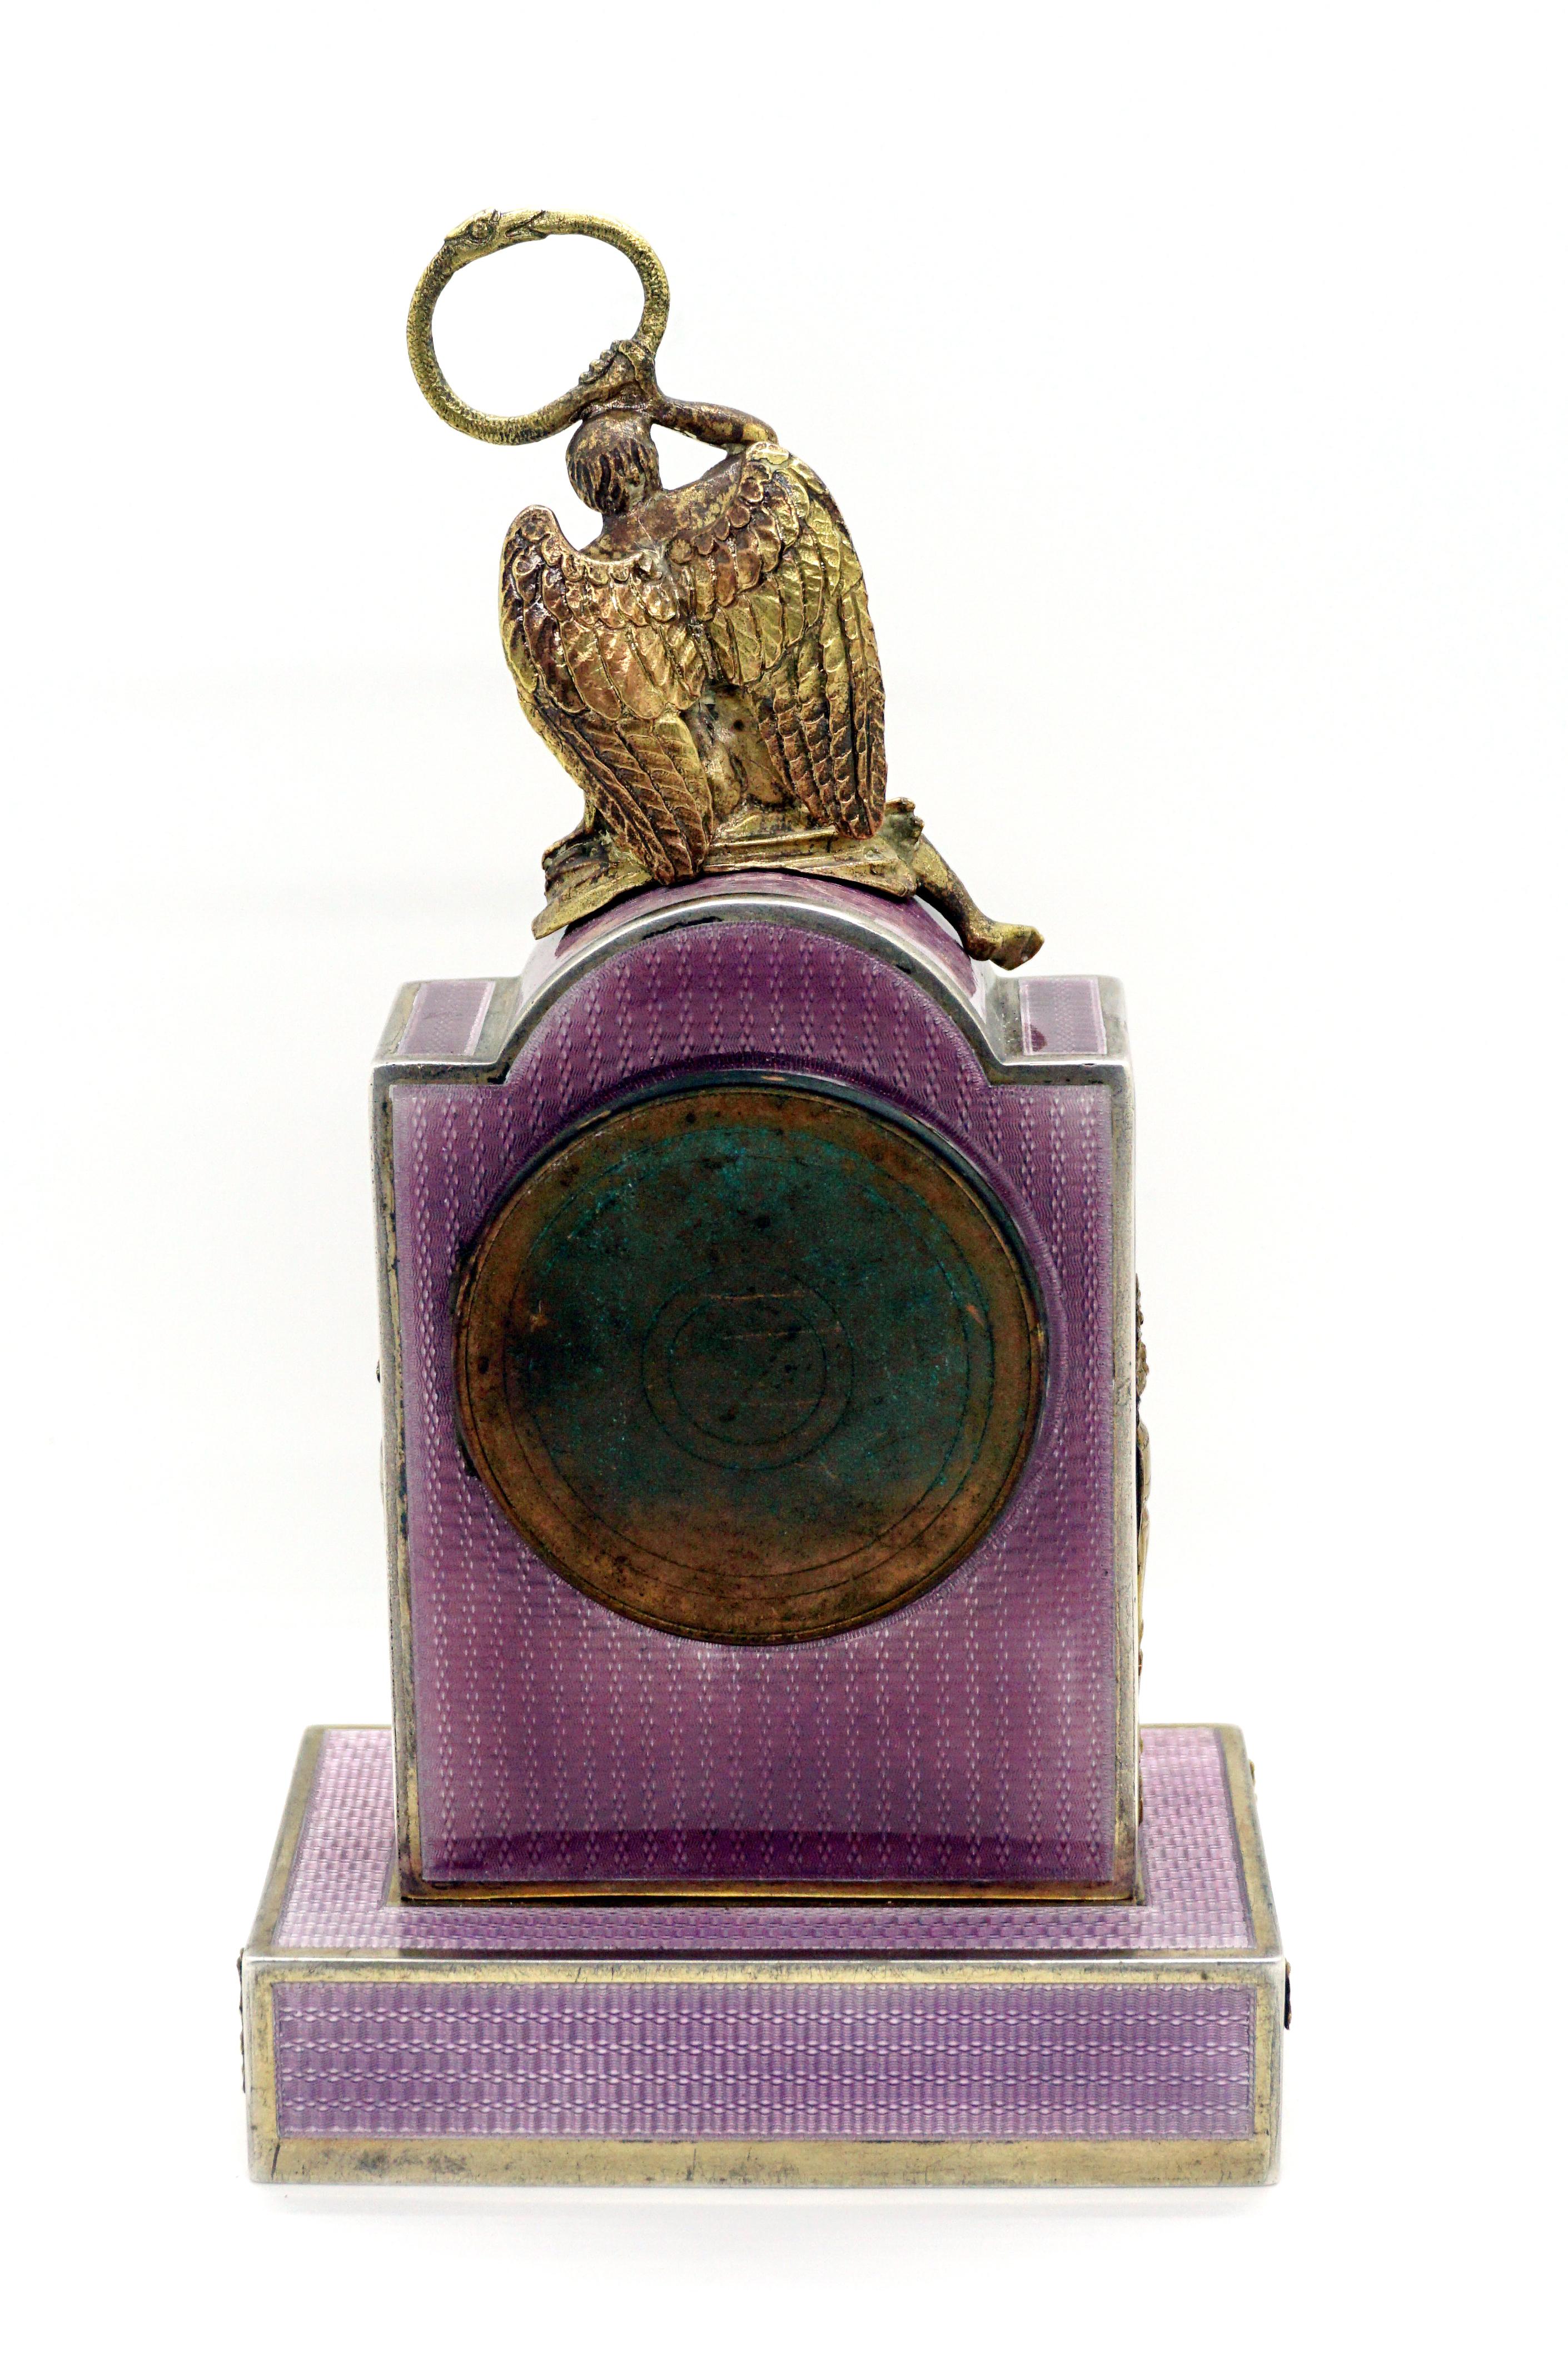 Early 20th Century Elegant French Art Nouveau Table Clock Silver Gouilloche Enamel Brass circa 1900